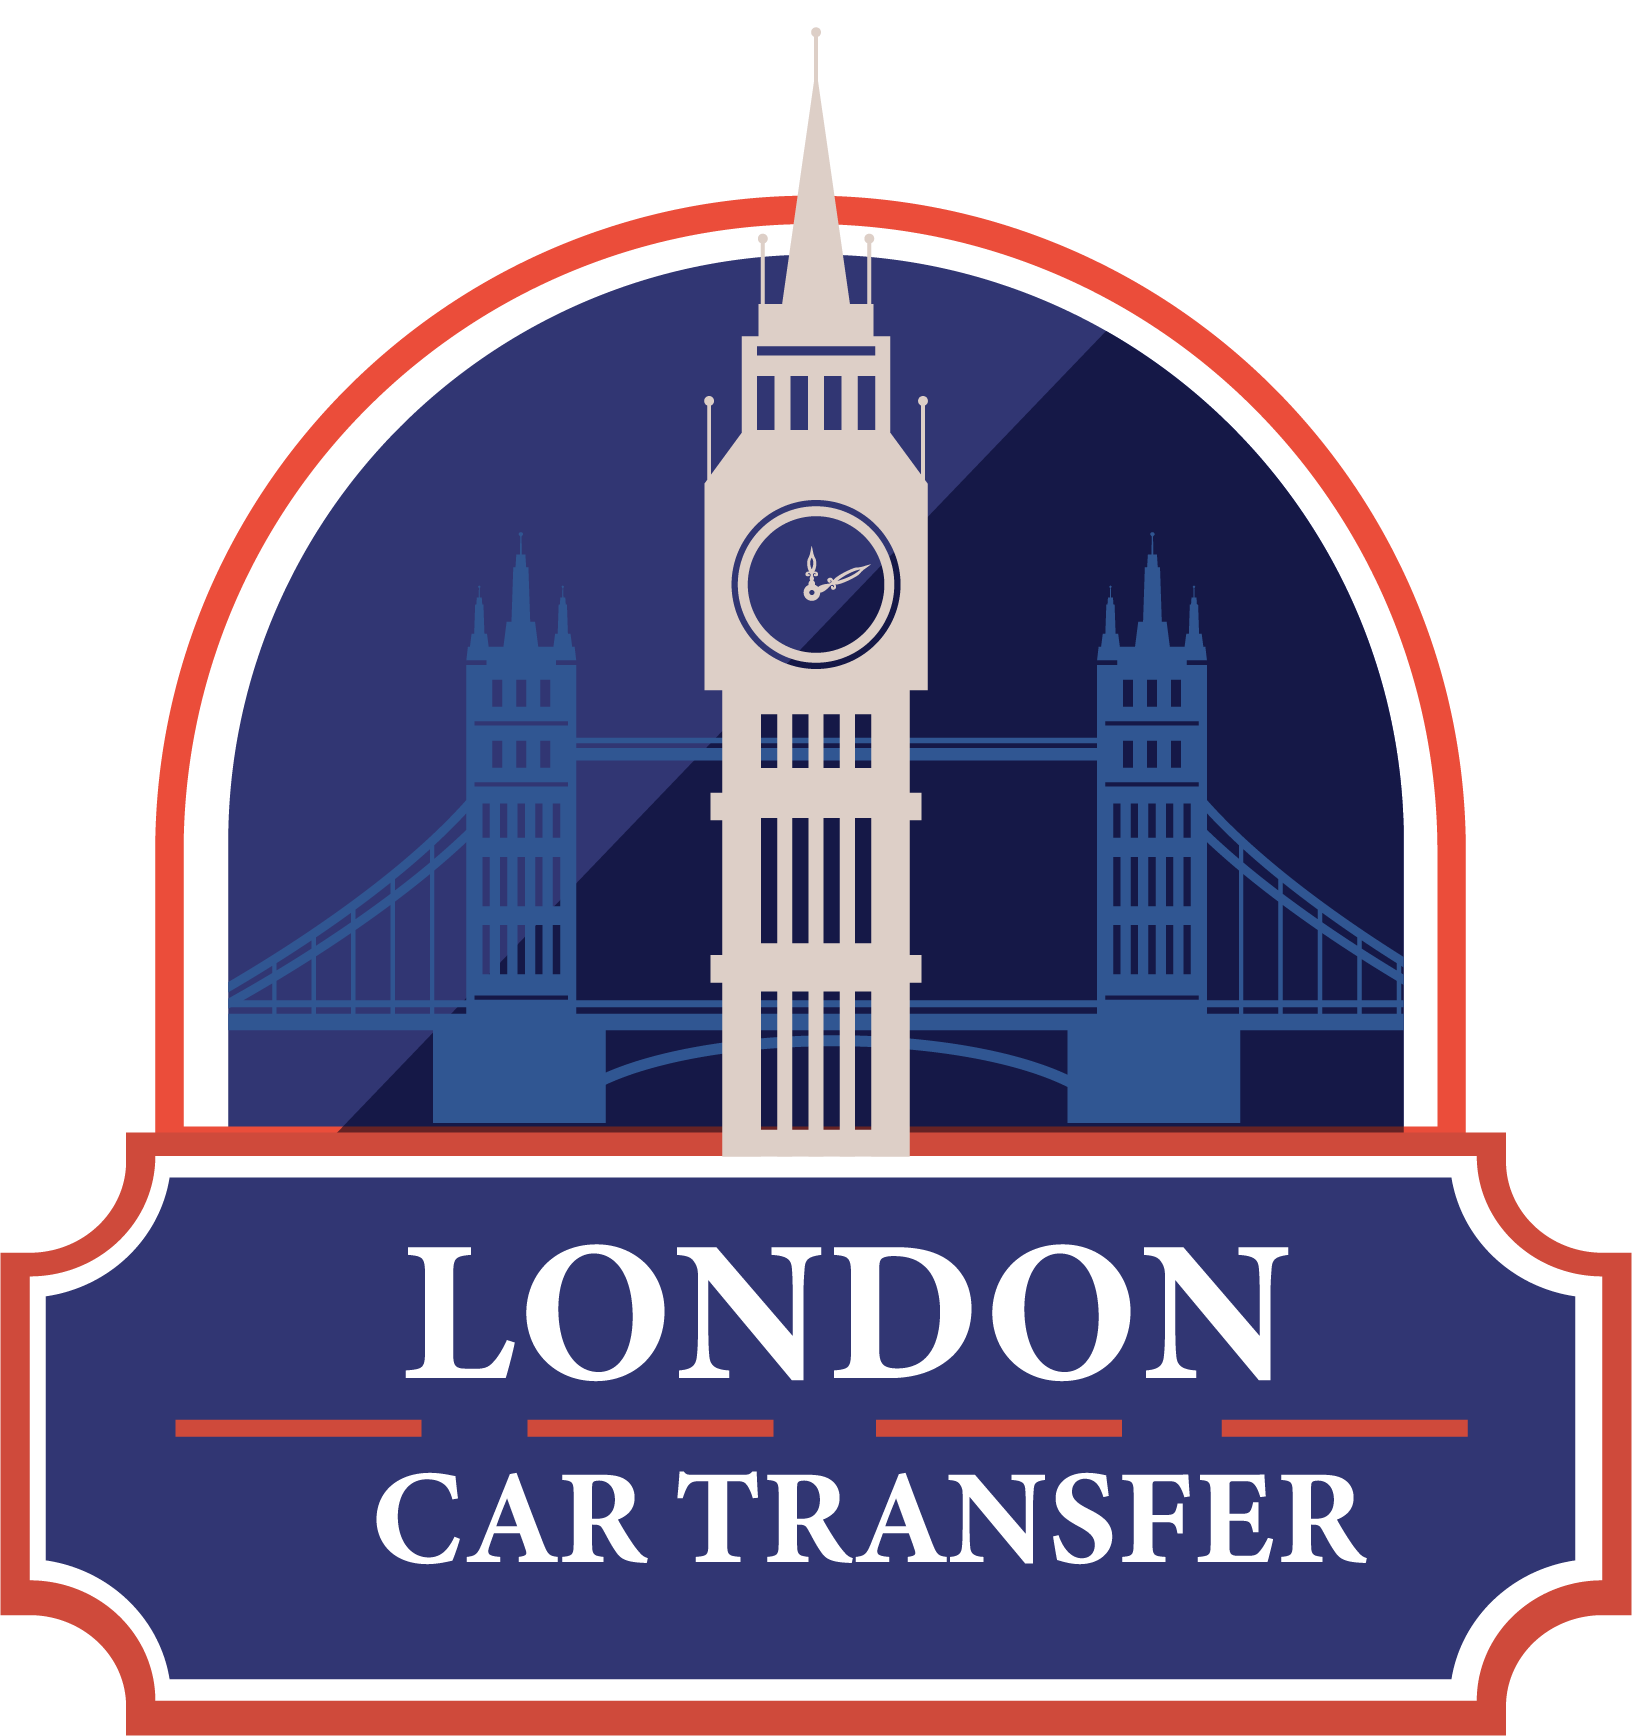 London car transfer